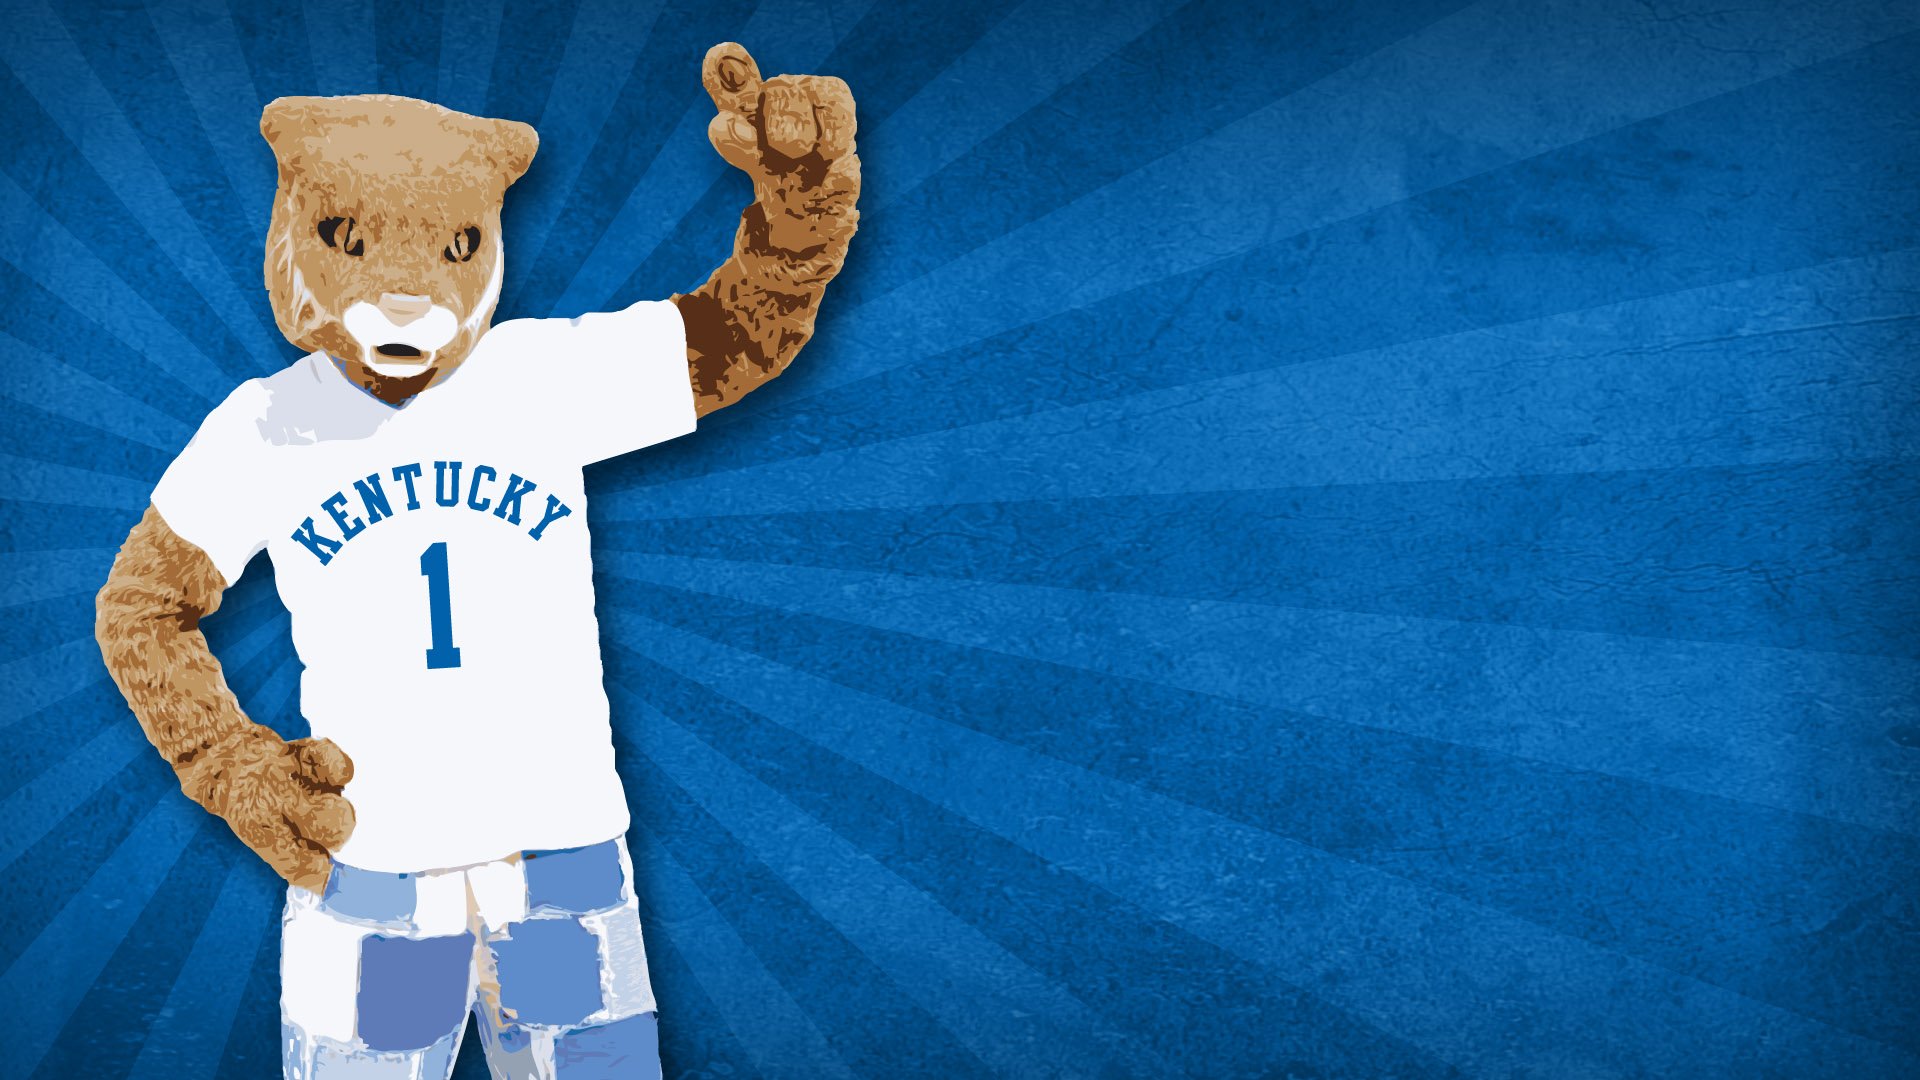  Kentucky desktop wallpaper featuring the Wildcats mascot Get it now